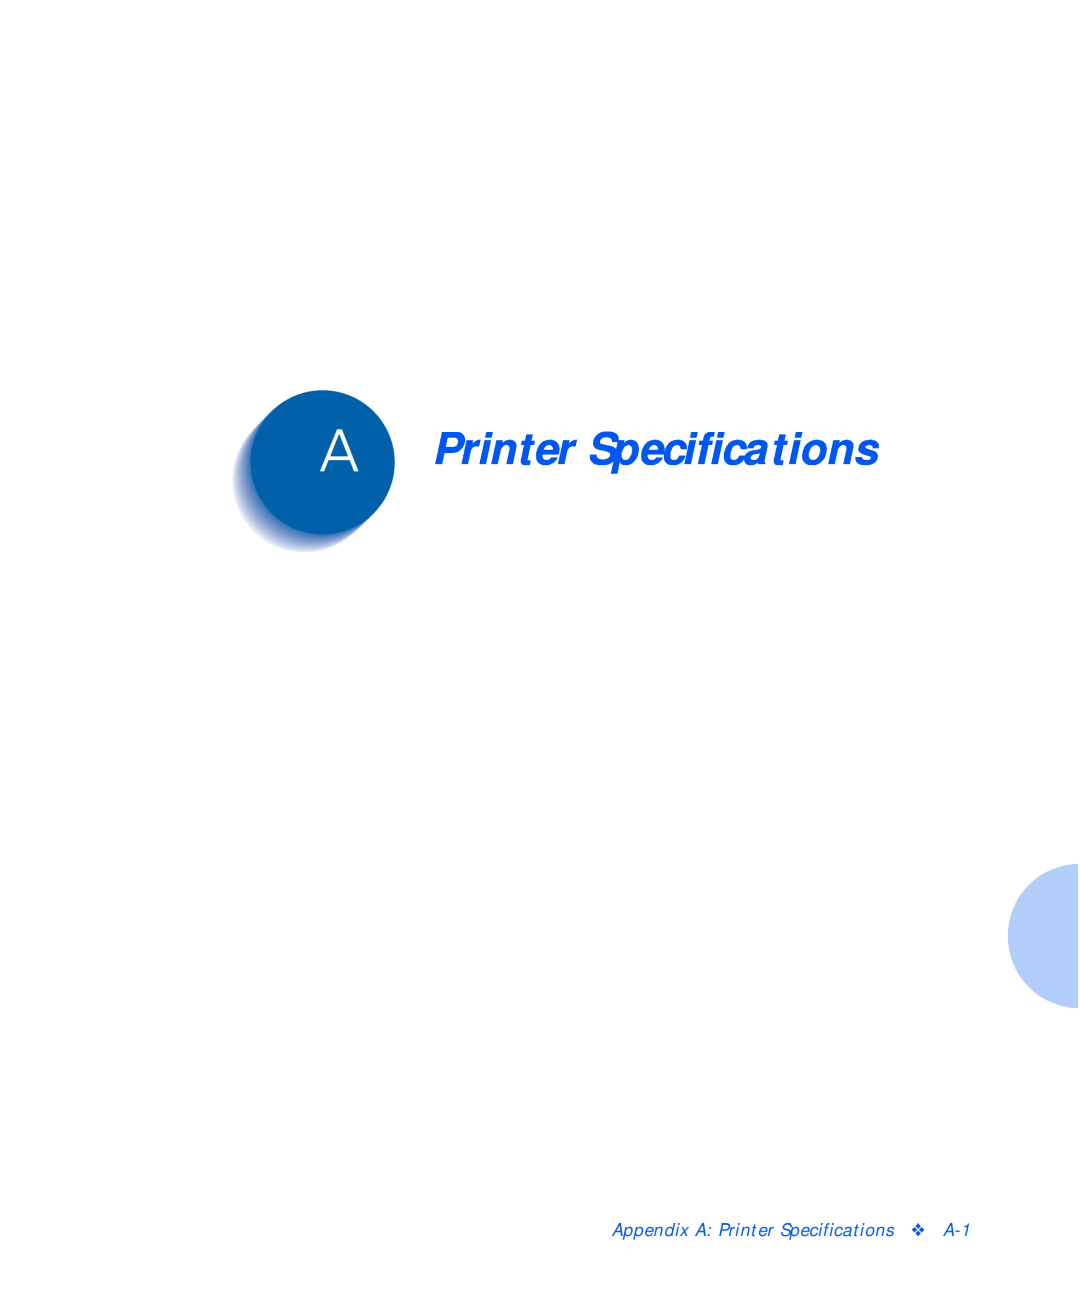 Xerox C15 manual Appendix A Printer Specifications A-1 